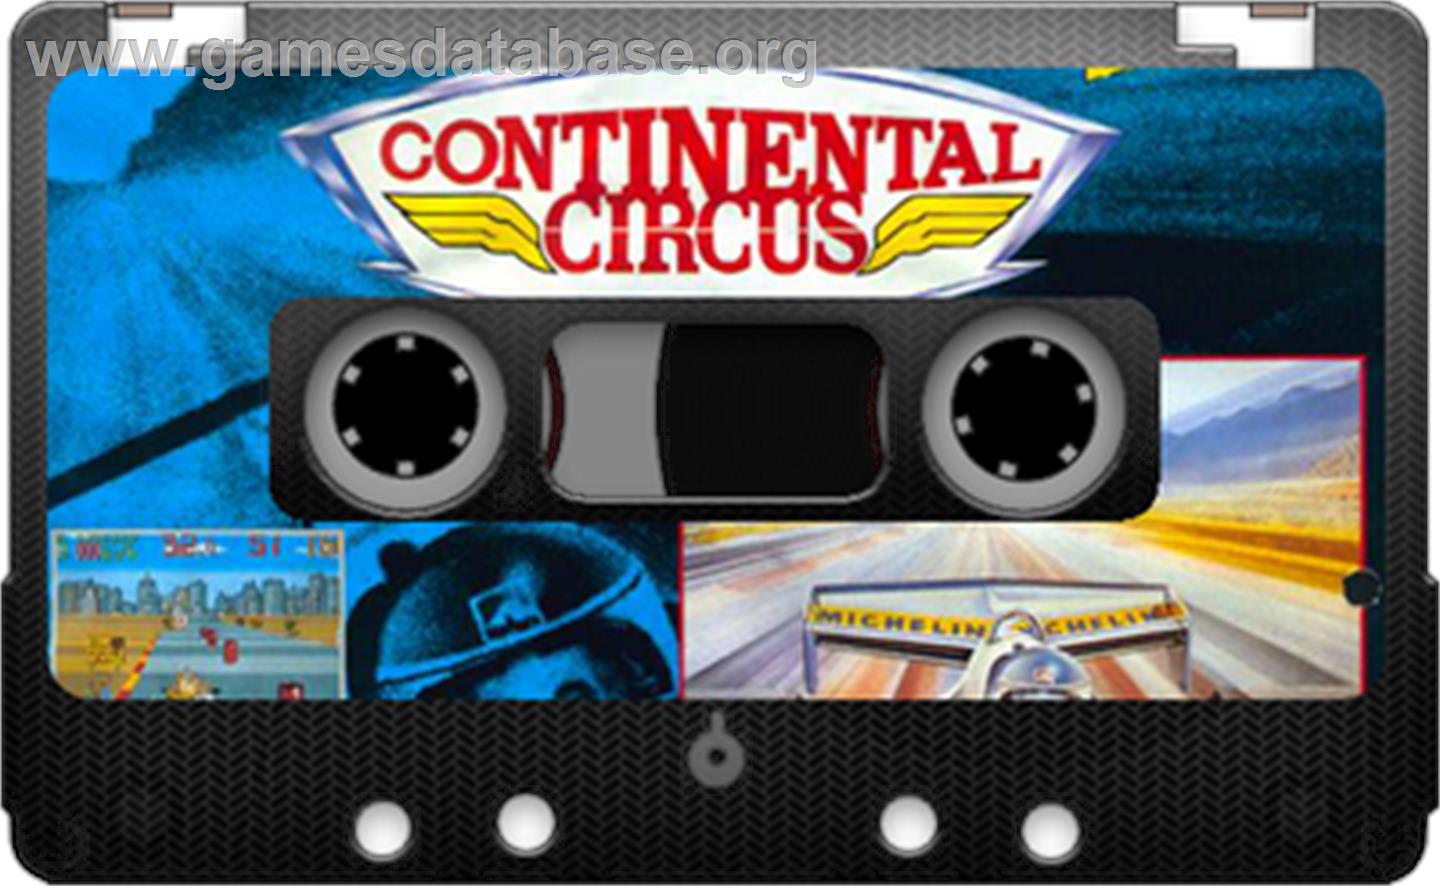 Continental Circus - Sinclair ZX Spectrum - Artwork - Cartridge